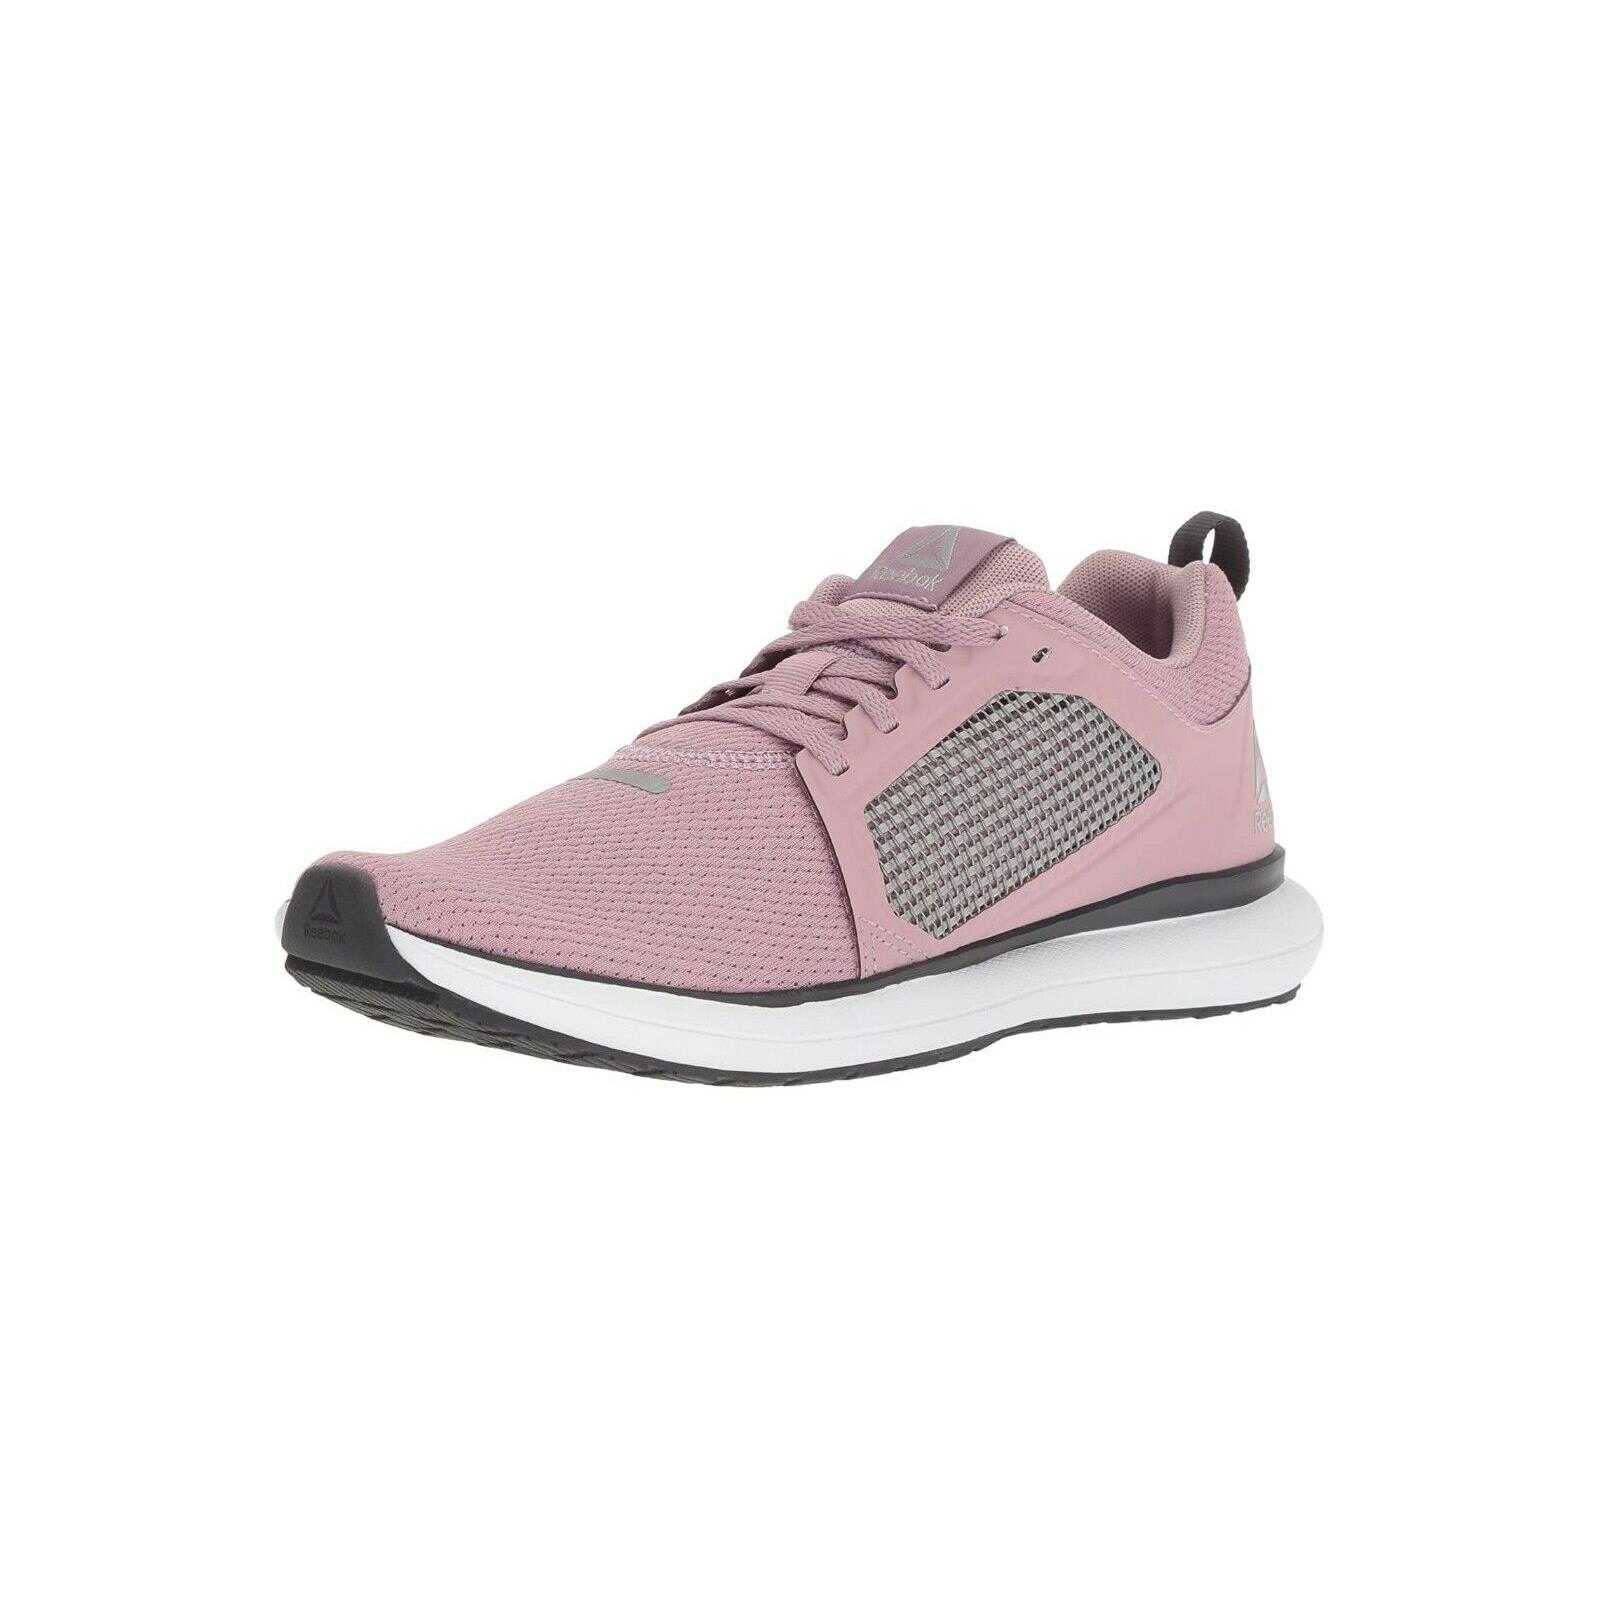 Reebok Driftium Ride Running Women Girls Shoes Sneakers Knit Violet Lilac Pink